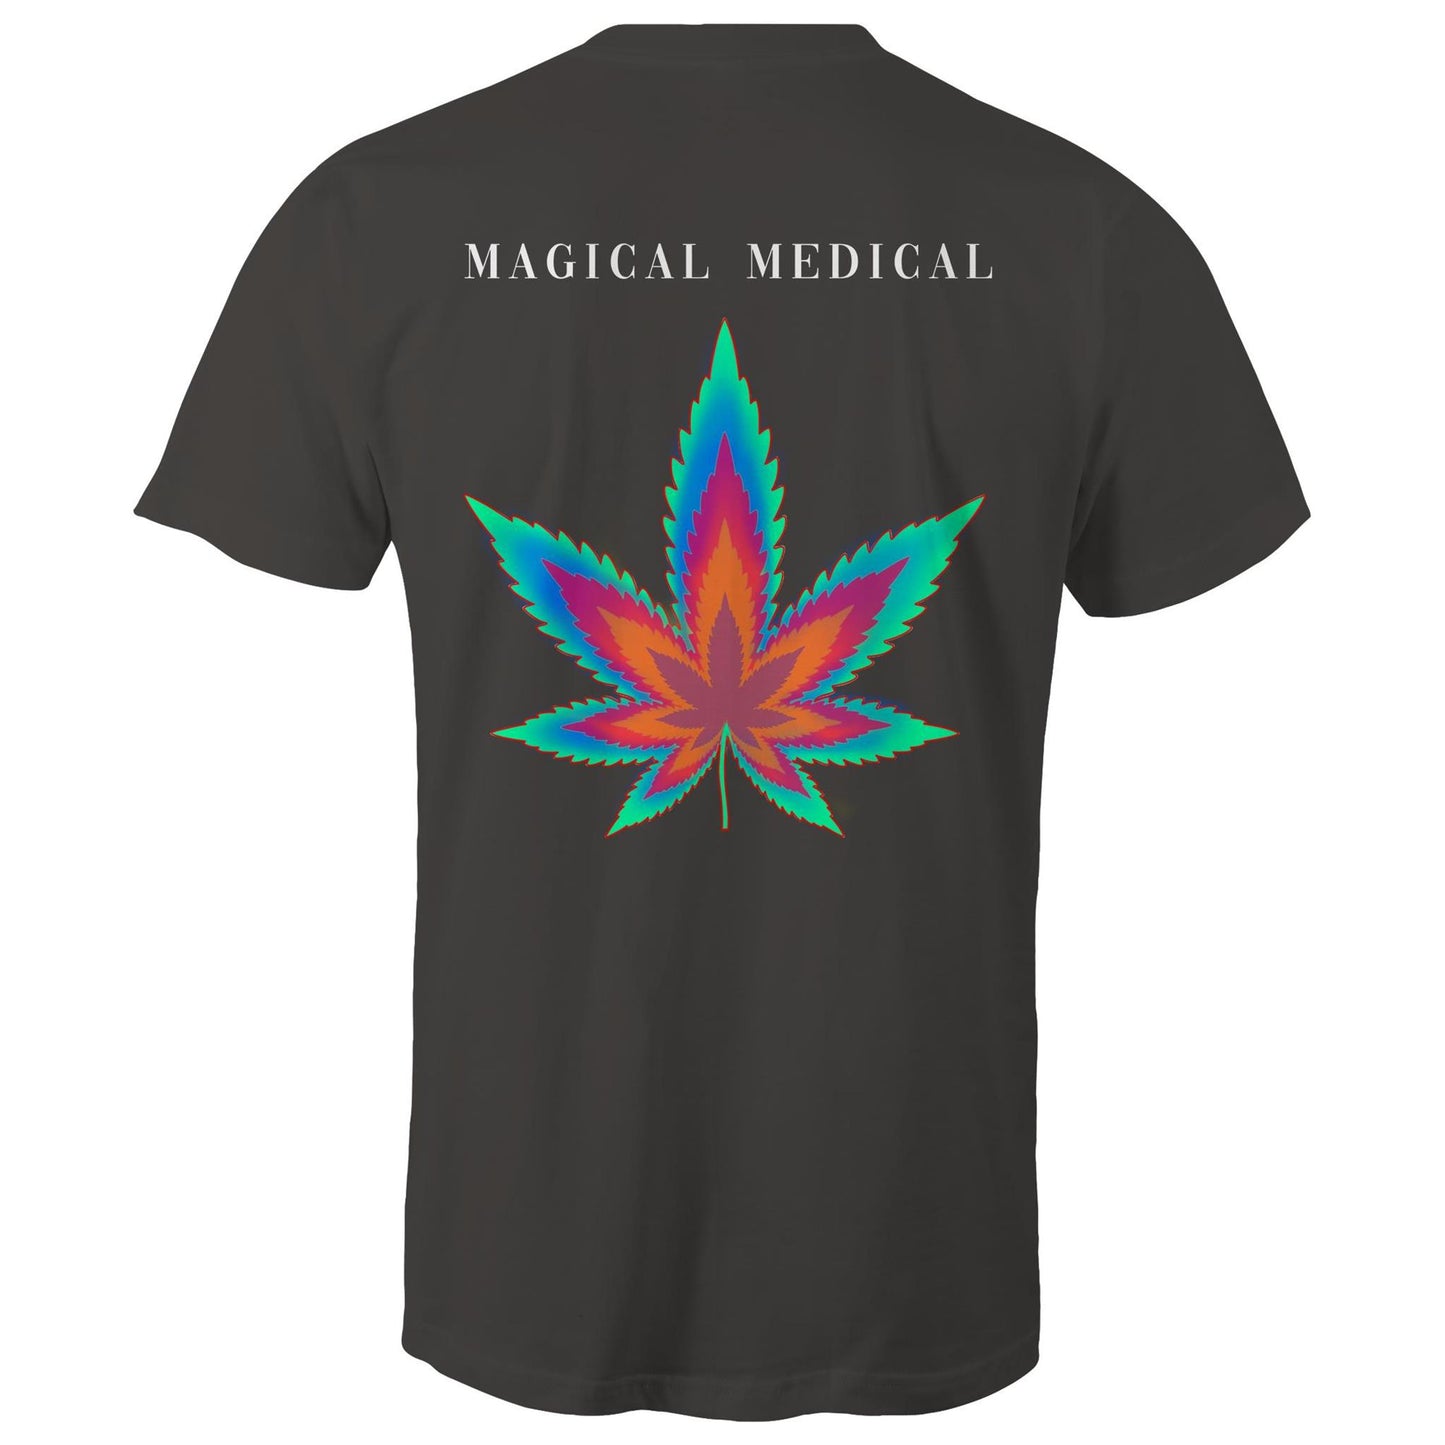 Magical Medical t shirts